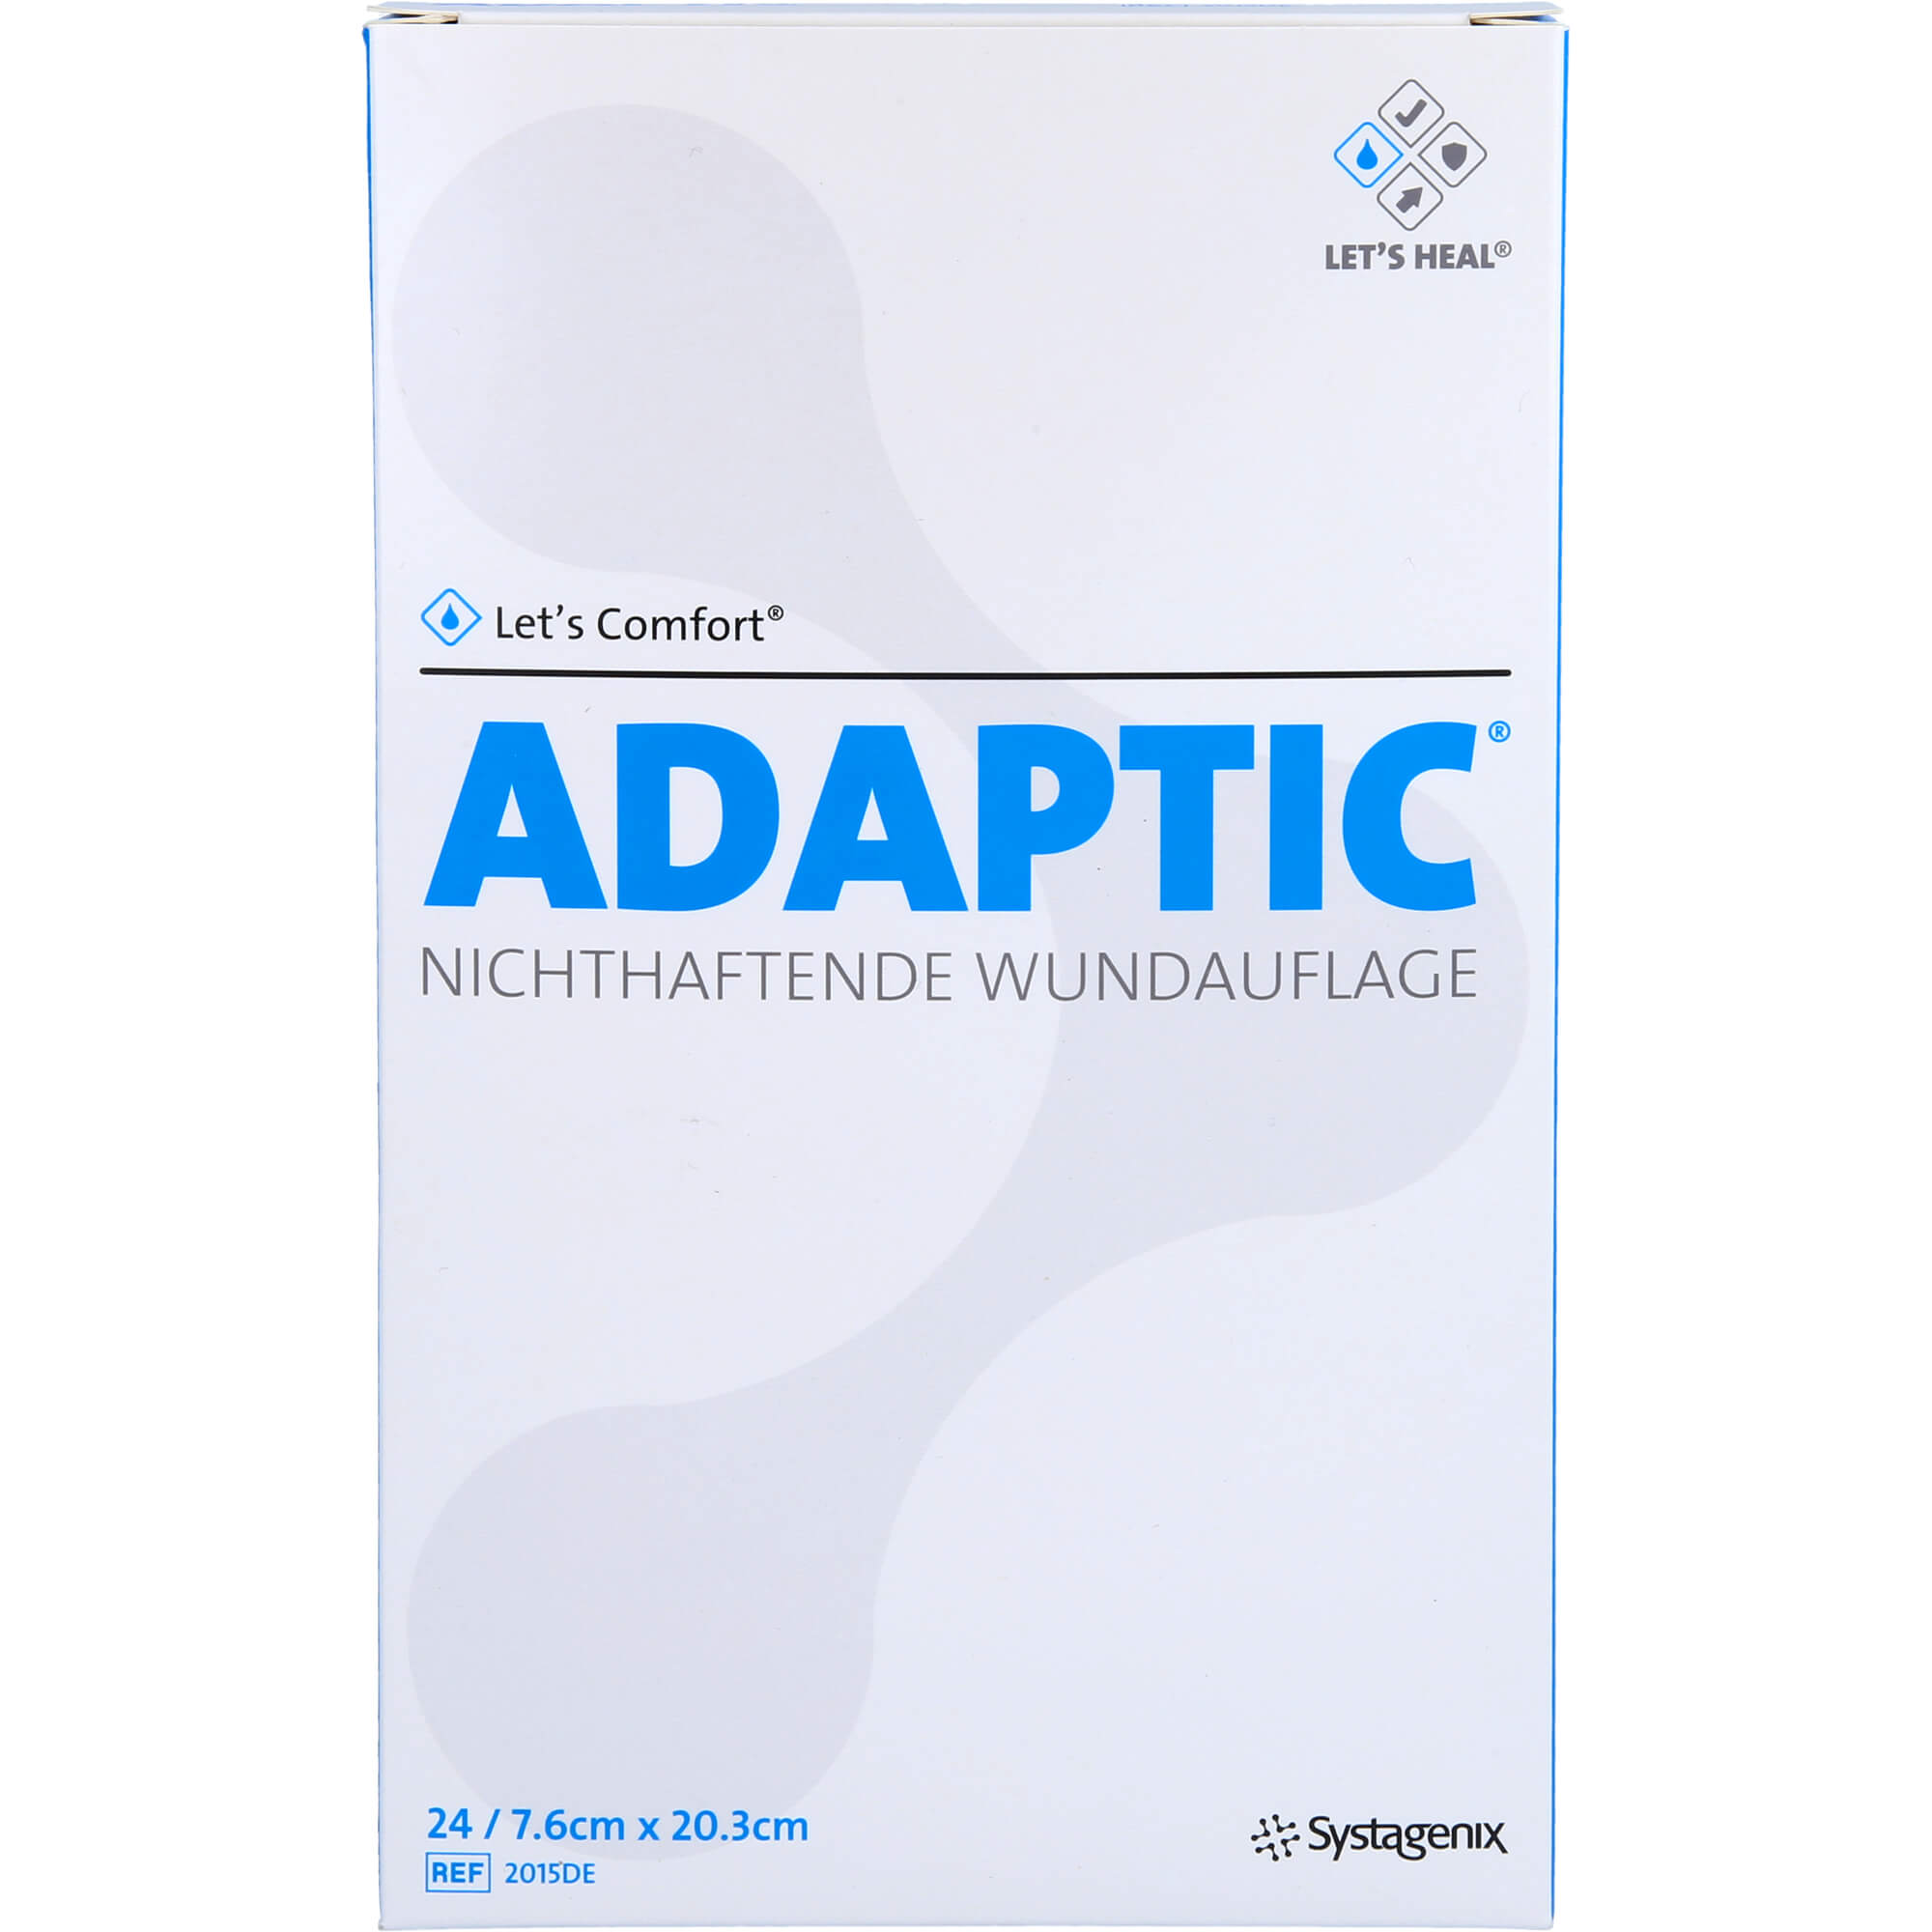 ADAPTIC 7,6x20,3 cm feuchte Wundauflage 2015